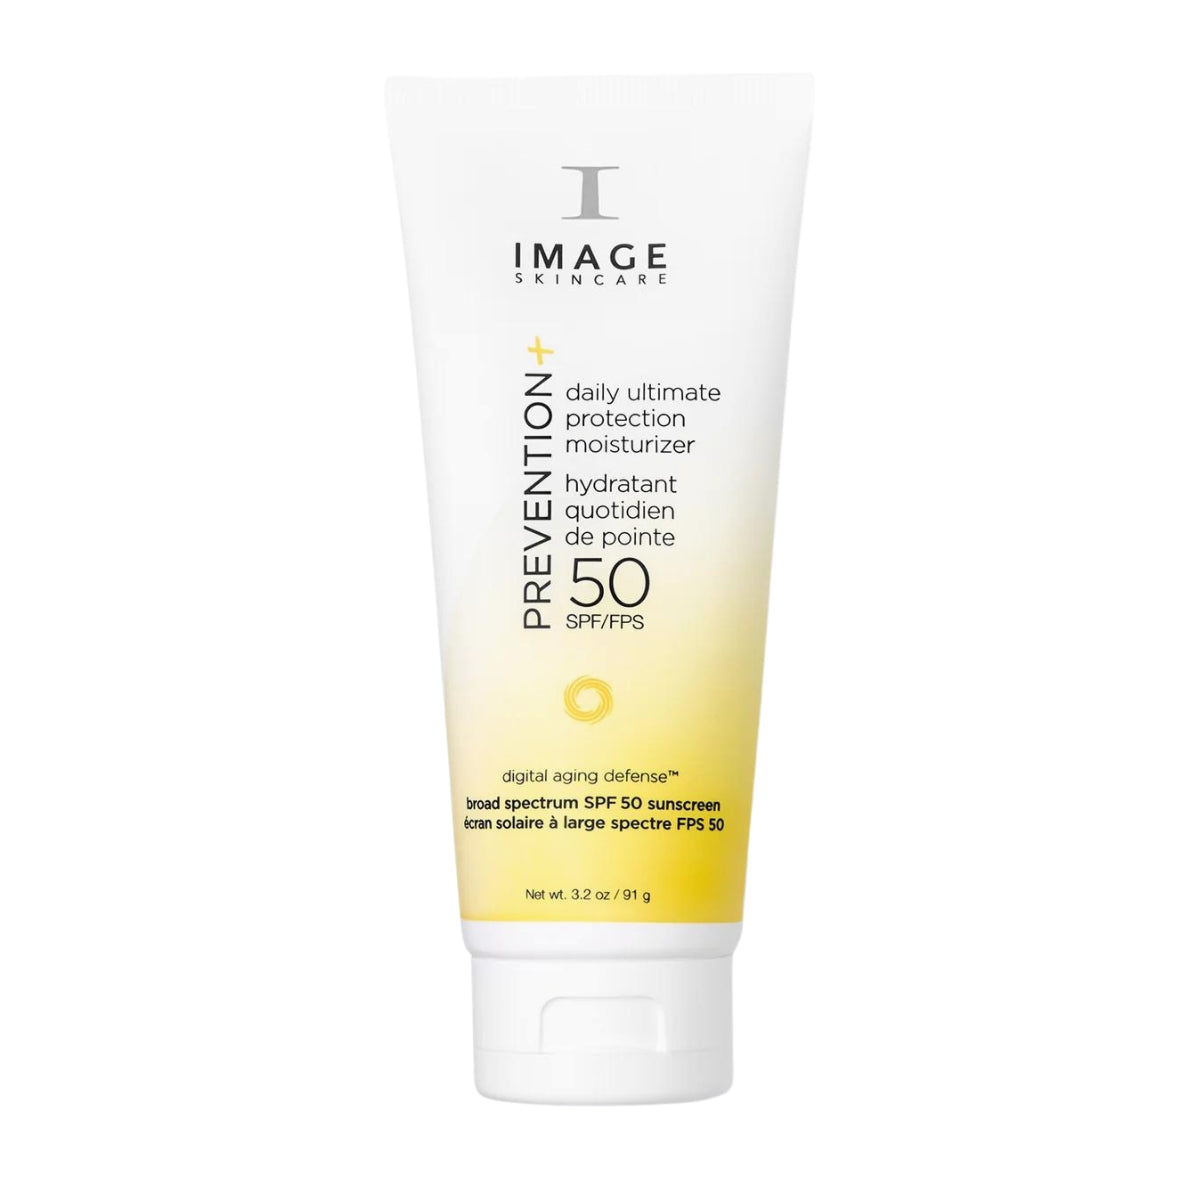 IMAGE Skincare PREVENTION+ Daily Ultimate Protection Moisturiser SPF50